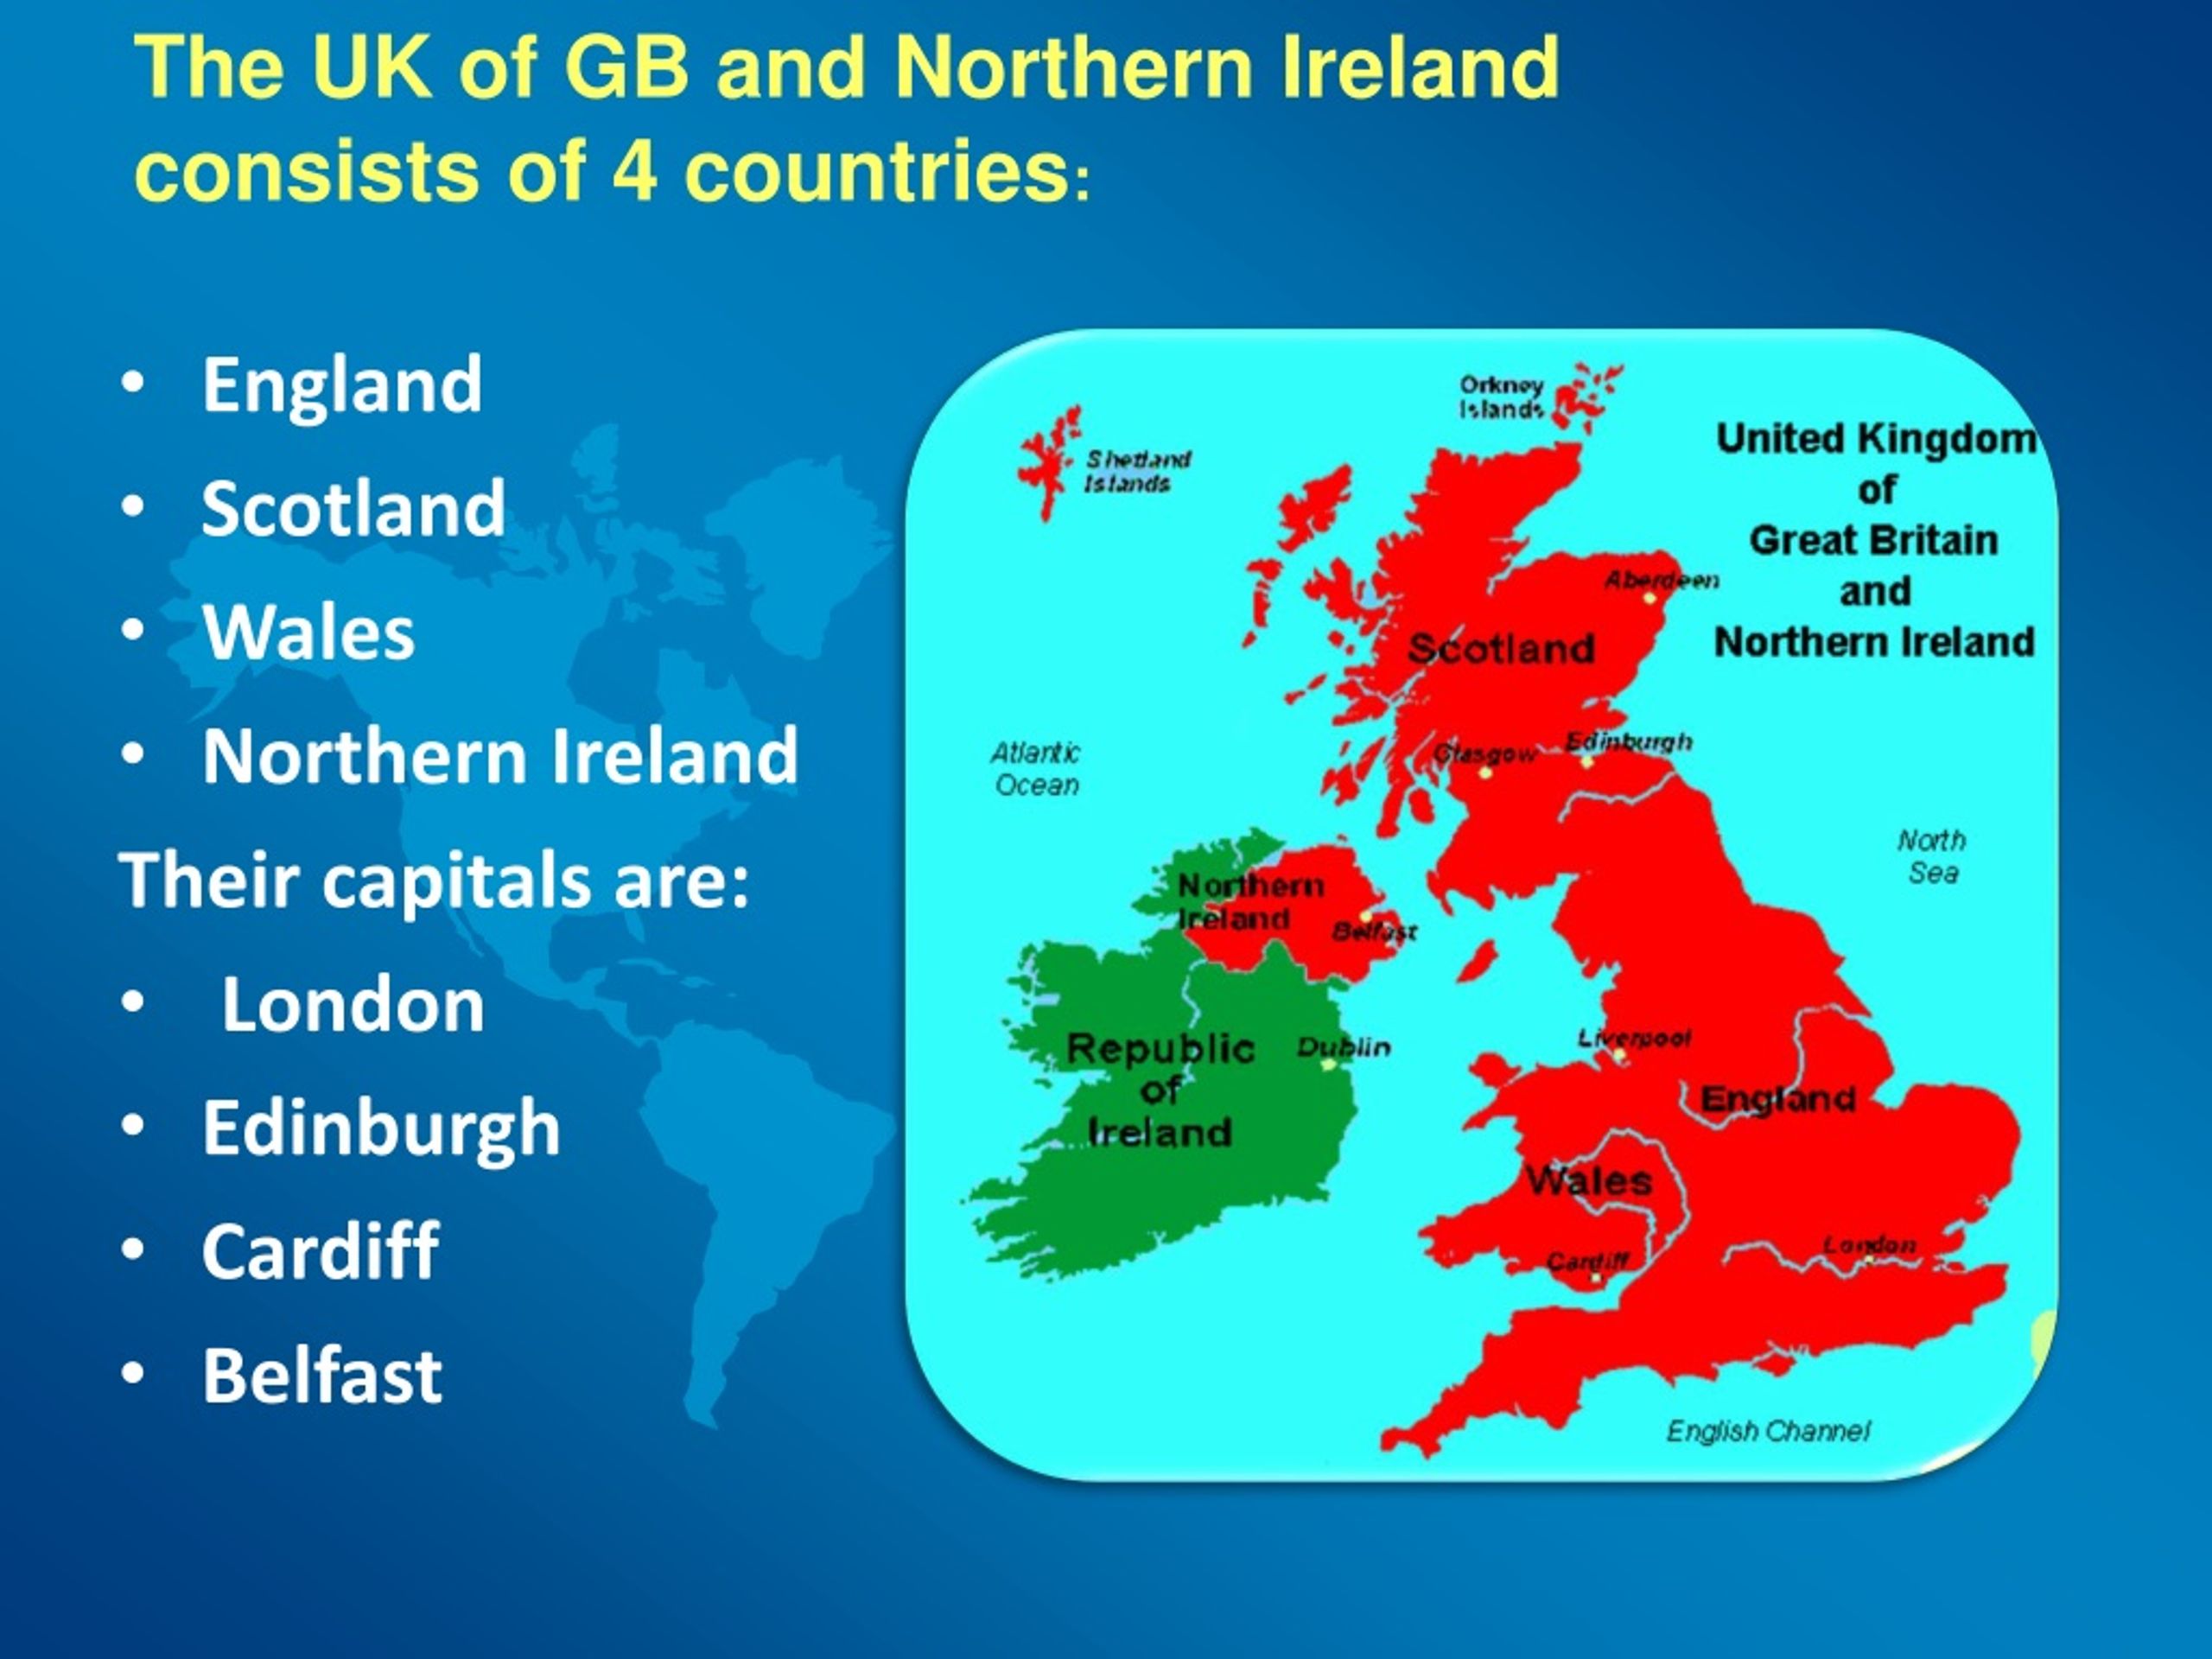 Consists of the first. England, Scotland, Wales and Northern Ireland на карте. Uk great Britain. Соединенное королевство Великобритании и Северной Ирландии. Столицы Англии Шотландии Уэльса и Северной Ирландии.